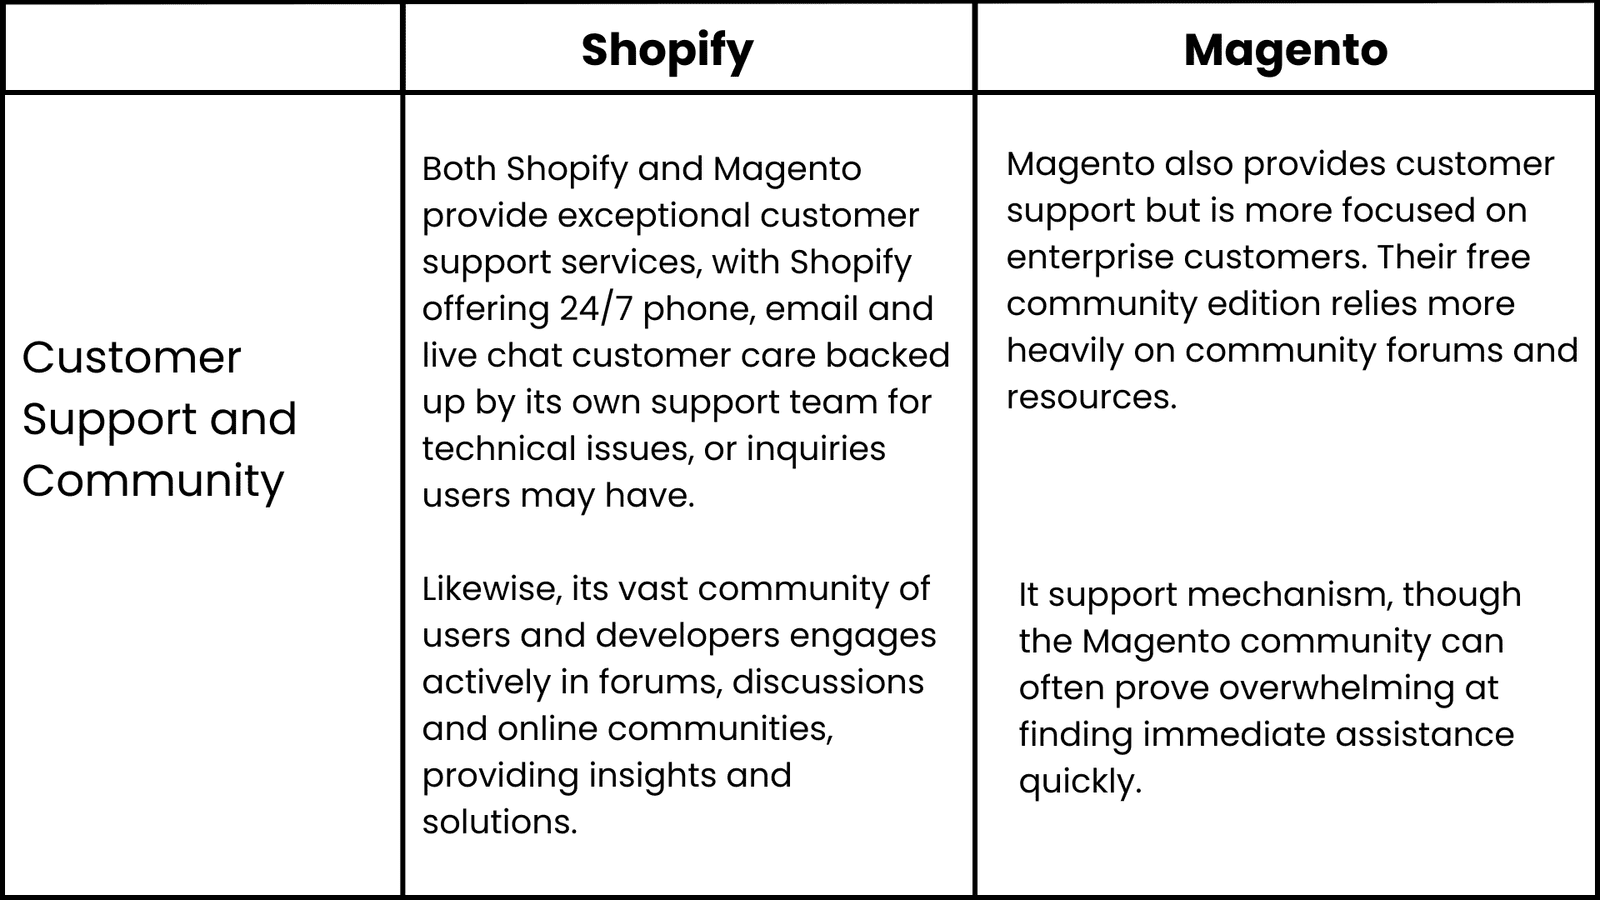 Shopify Vs Magento